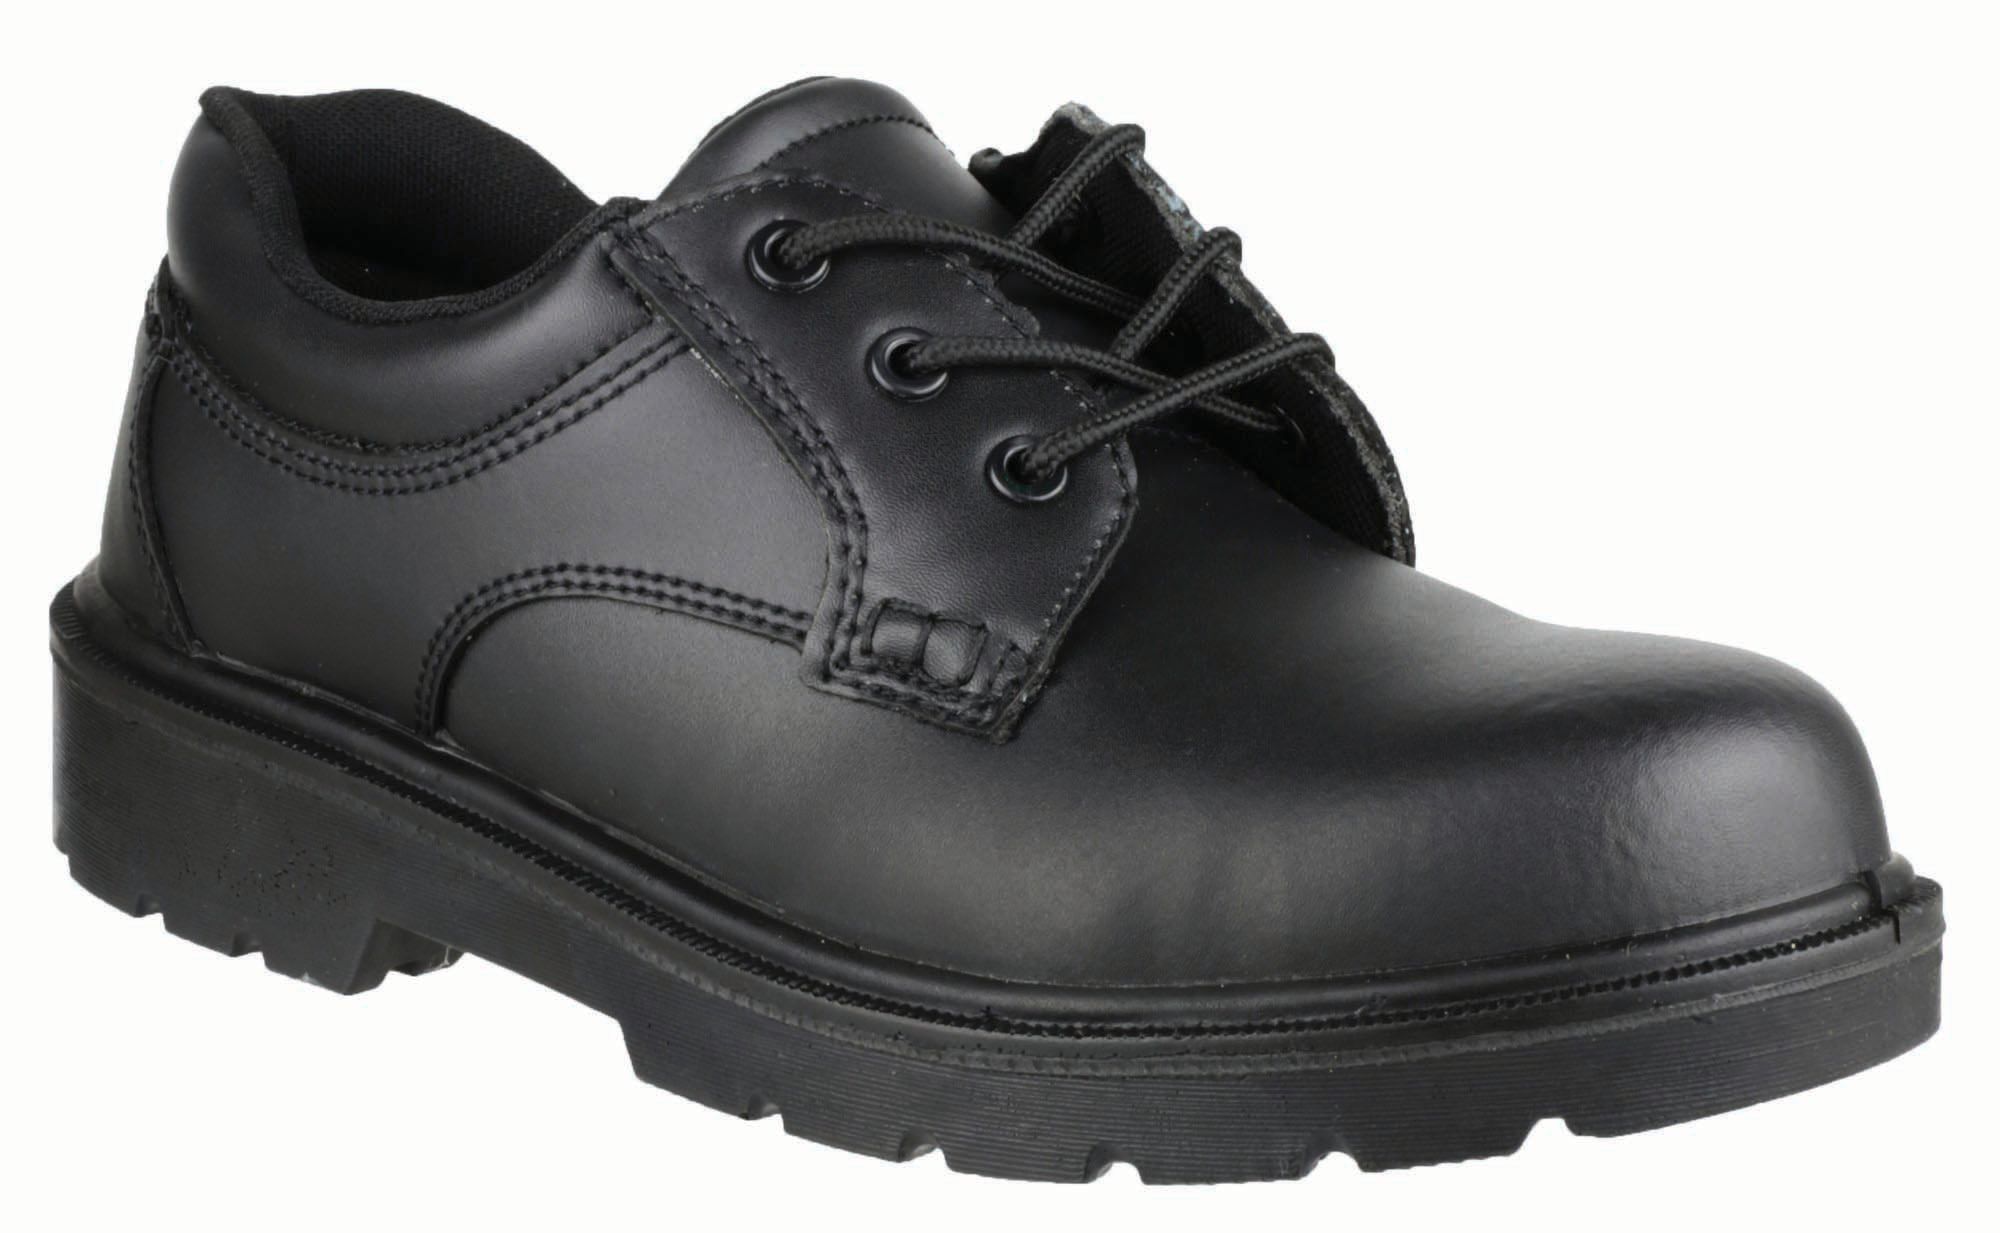 Image of Amblers Safety FS38C Safety Shoe - Black Size 3